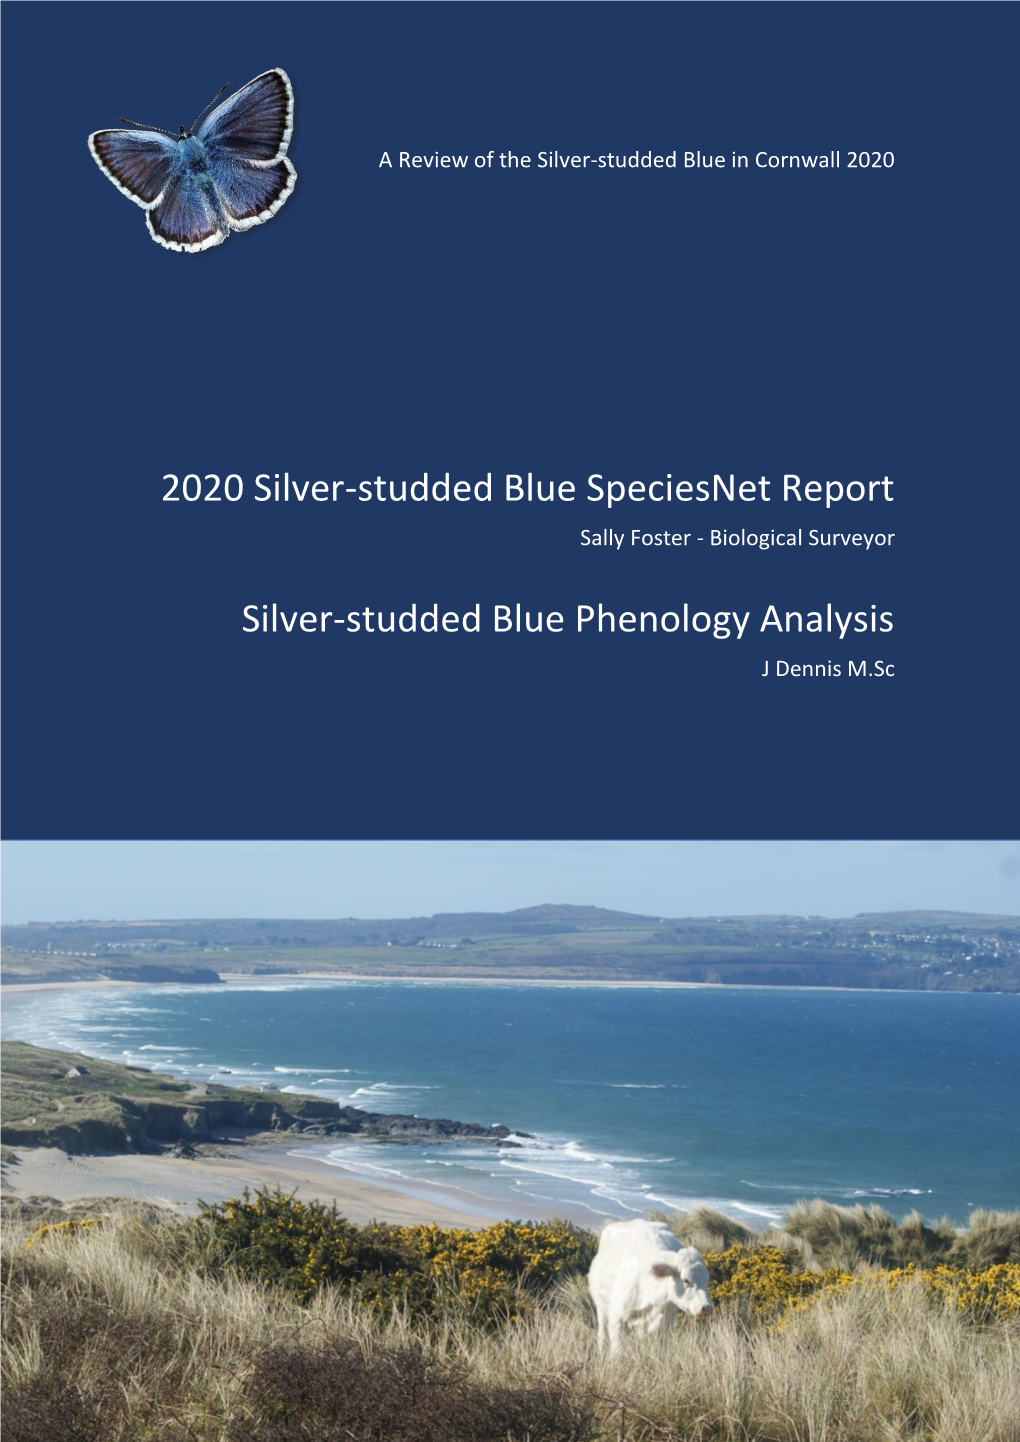 2020 Silver-Studded Blue Speciesnet Report Sally Foster - Biological Surveyor